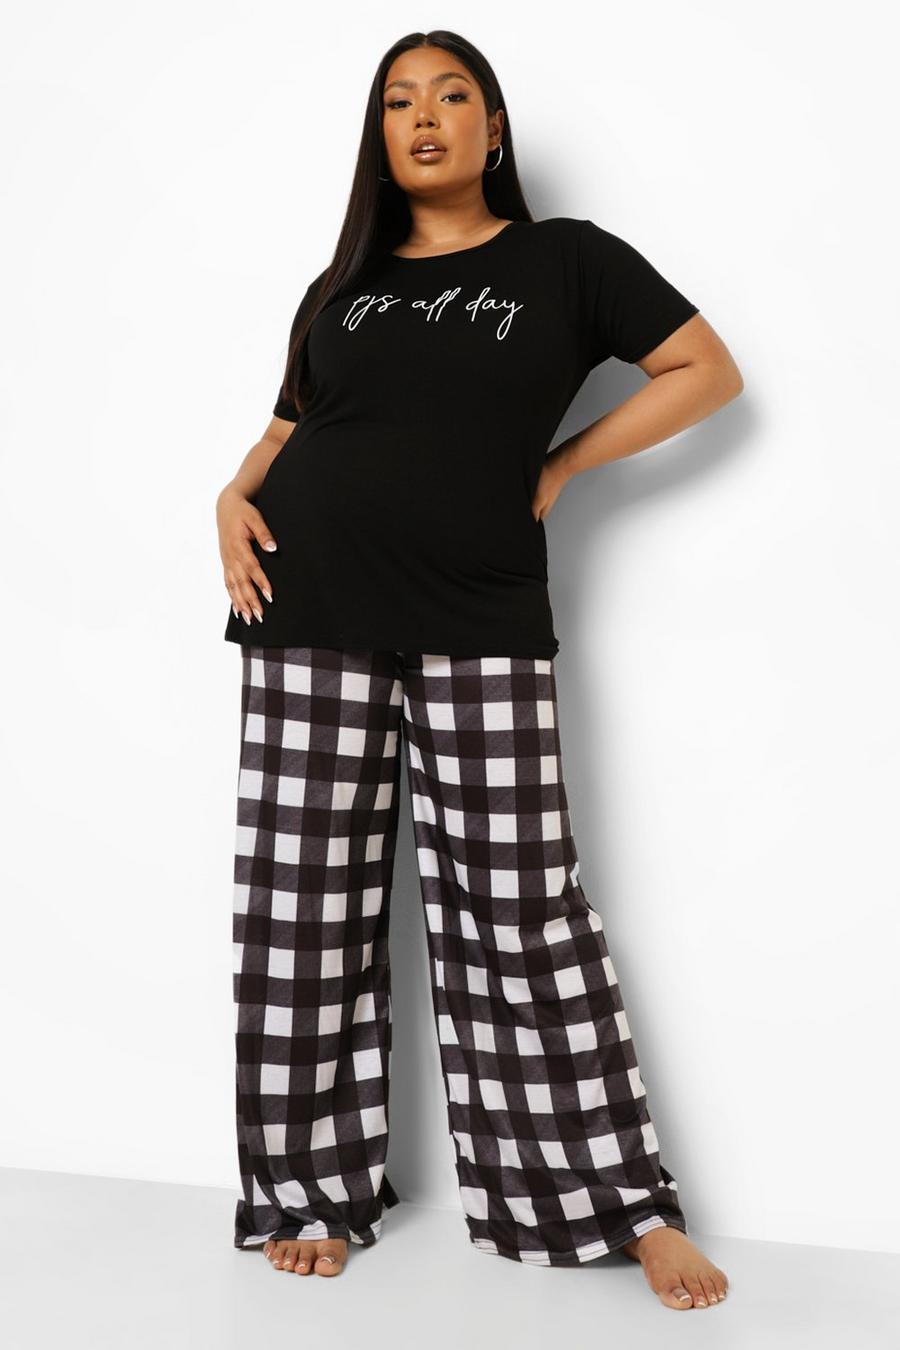 Black noir Plus 'PJs All Day' Slogan Top & Gingham Trousers Pyjama Set